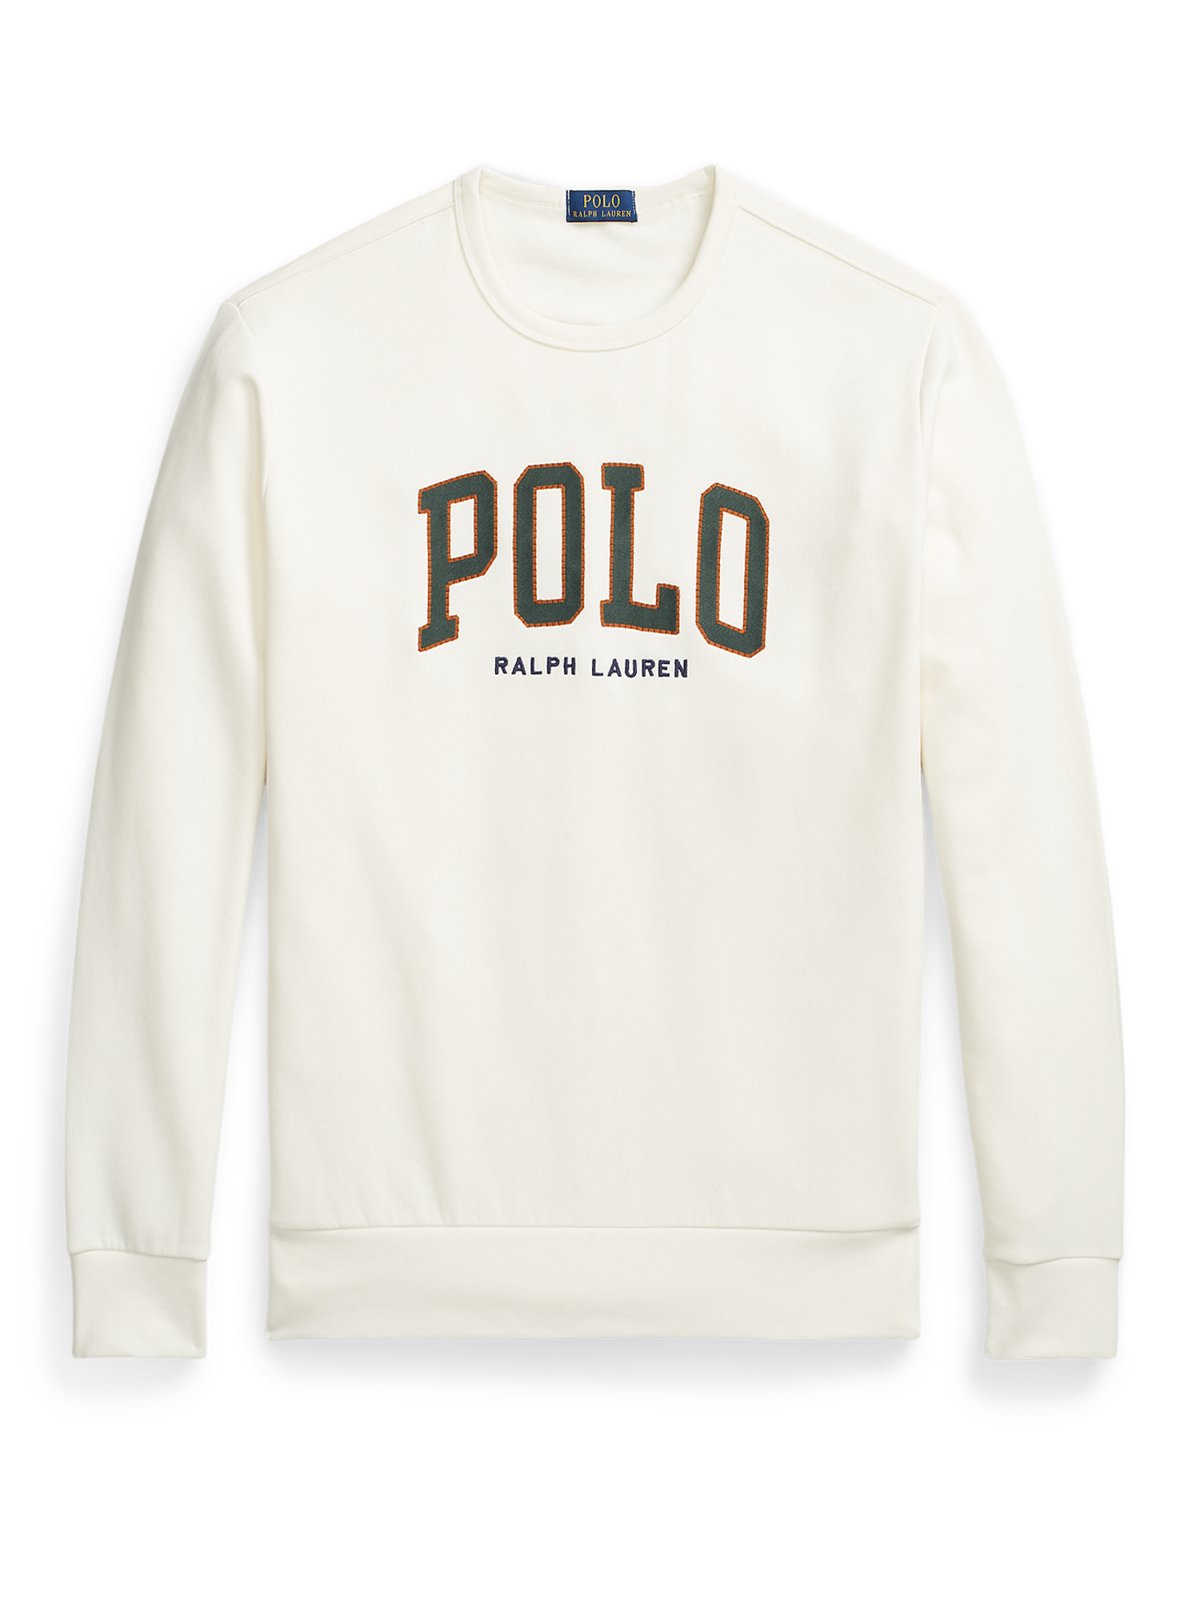 Polo Ralph Lauren Softes Sweatshirt mit gesticktem Polo-Schriftzug